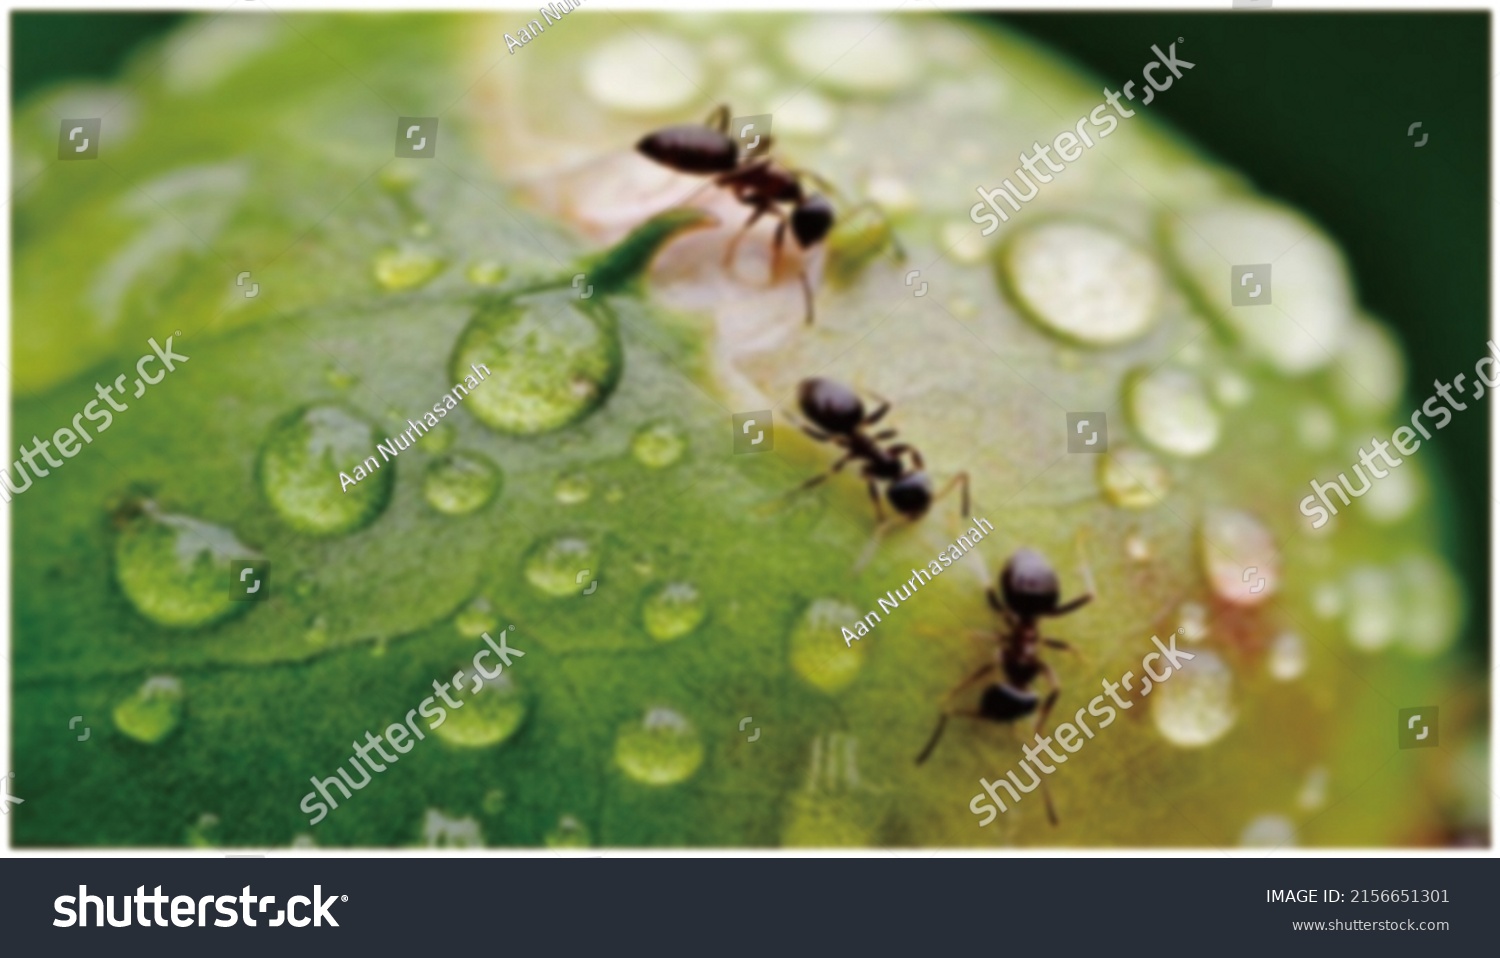 defocused abstract background of ants on leaves after rain at bojong danas #2156651301